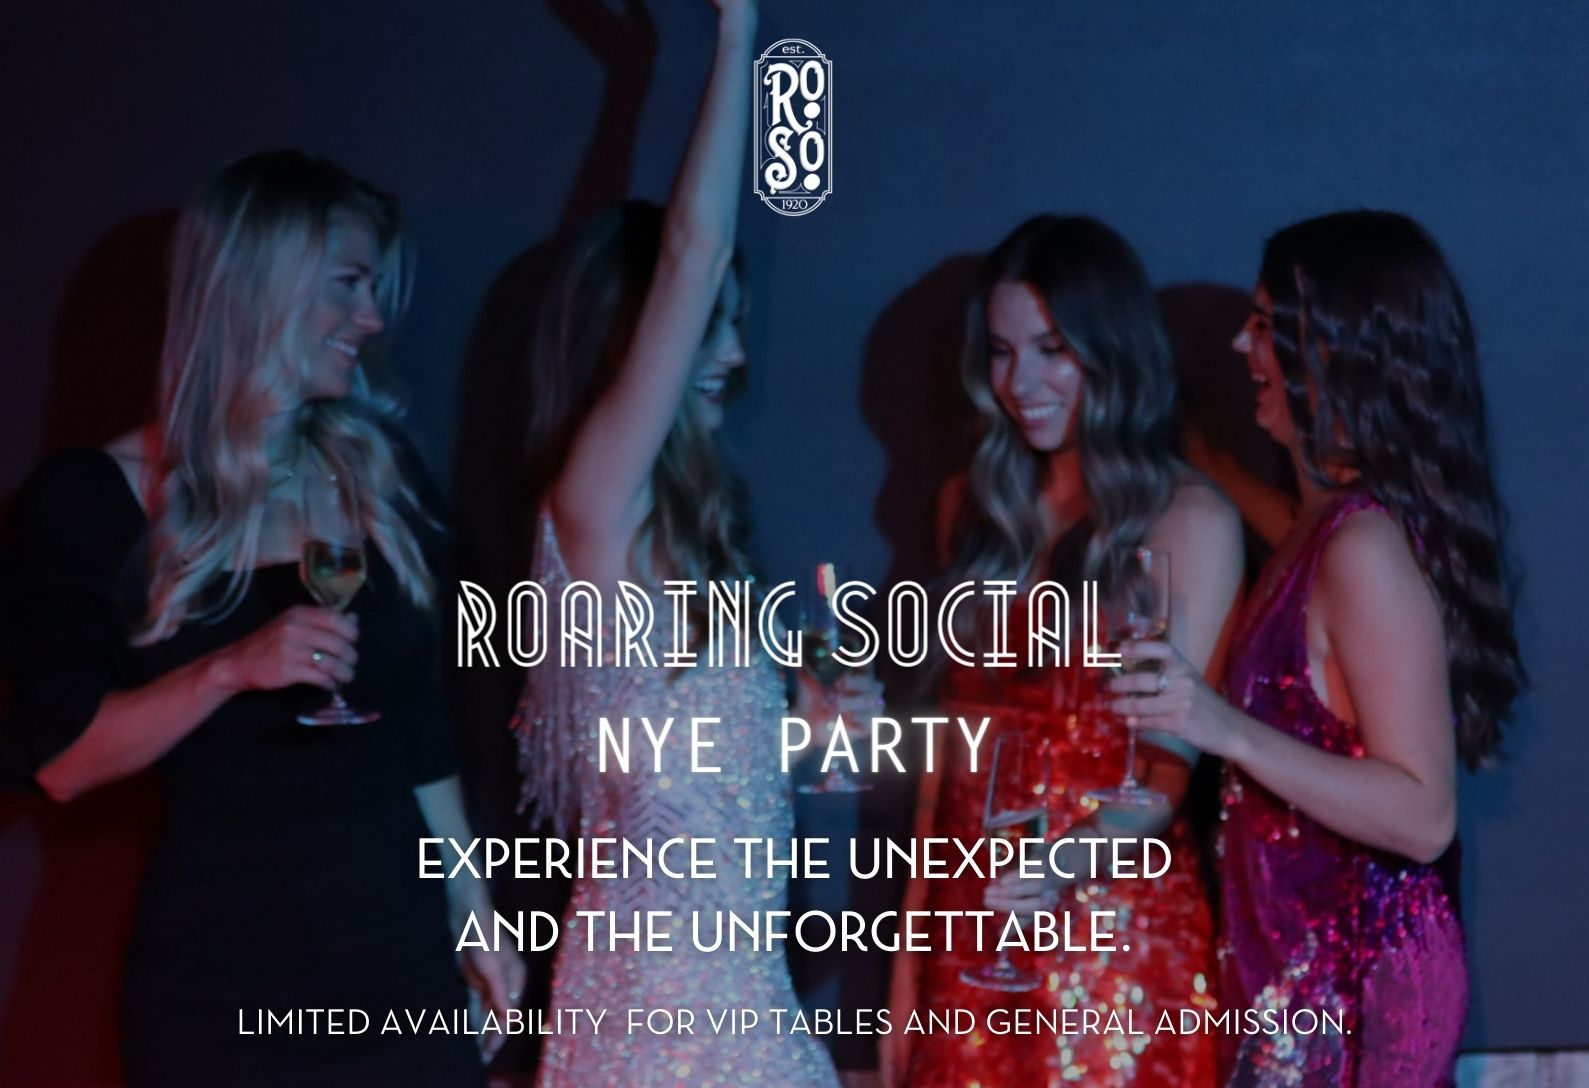 Roaring Social's New Year's Eve Celebration